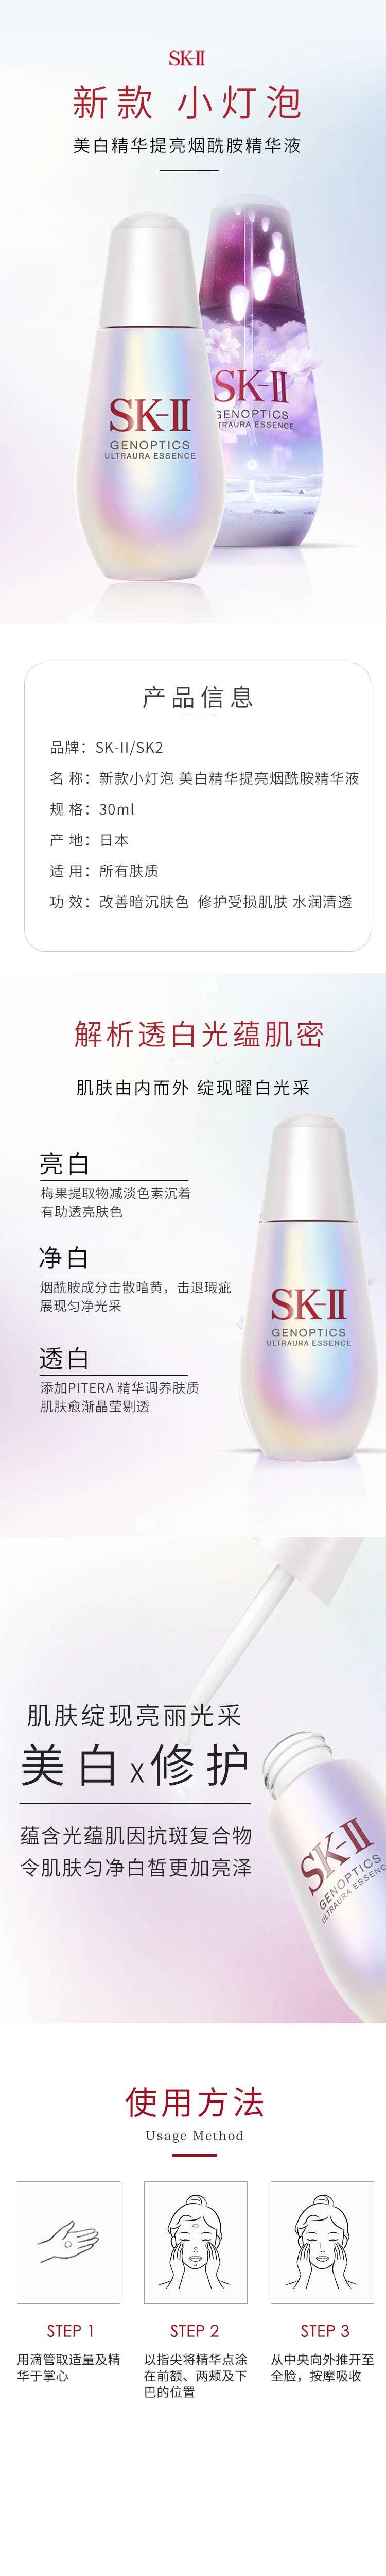 SK-IISK2 新款小灯泡30ml美白精华提亮烟酰胺精华液.jpg